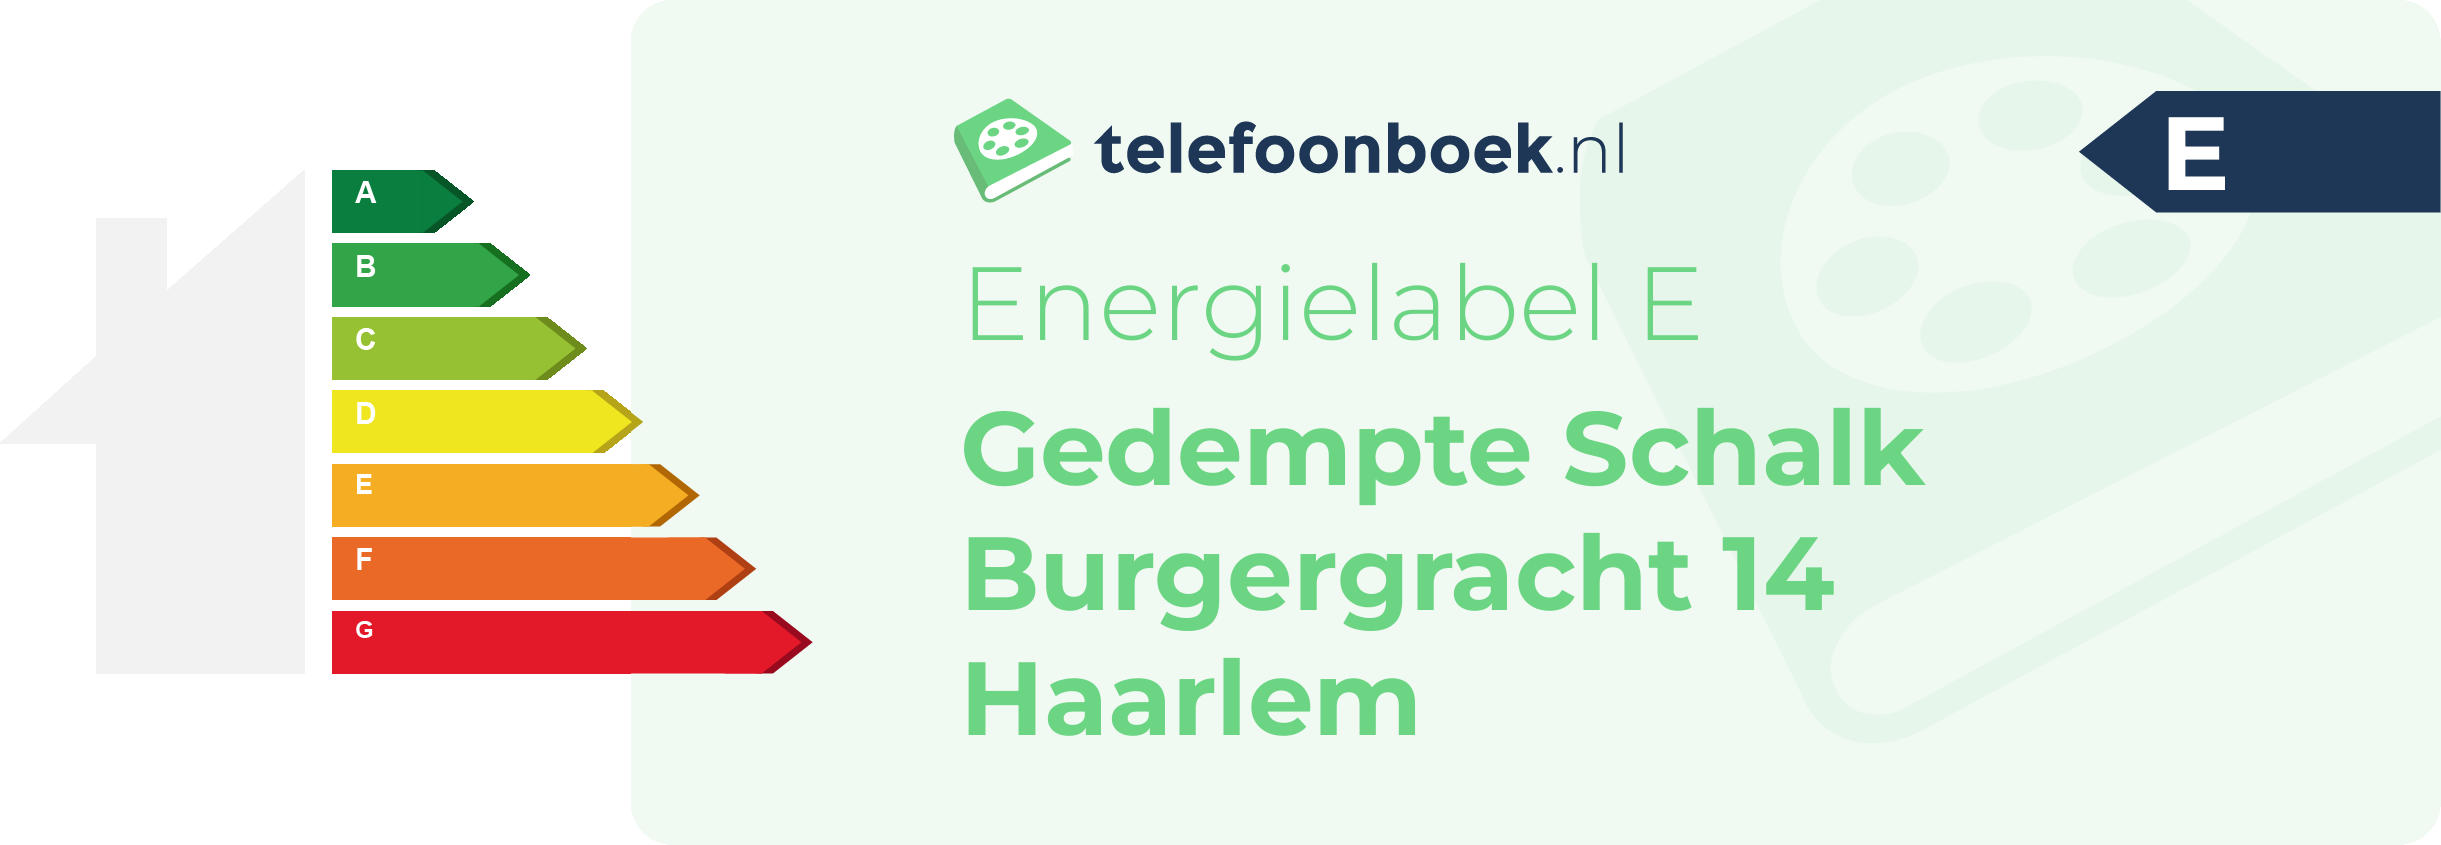 Energielabel Gedempte Schalk Burgergracht 14 Haarlem